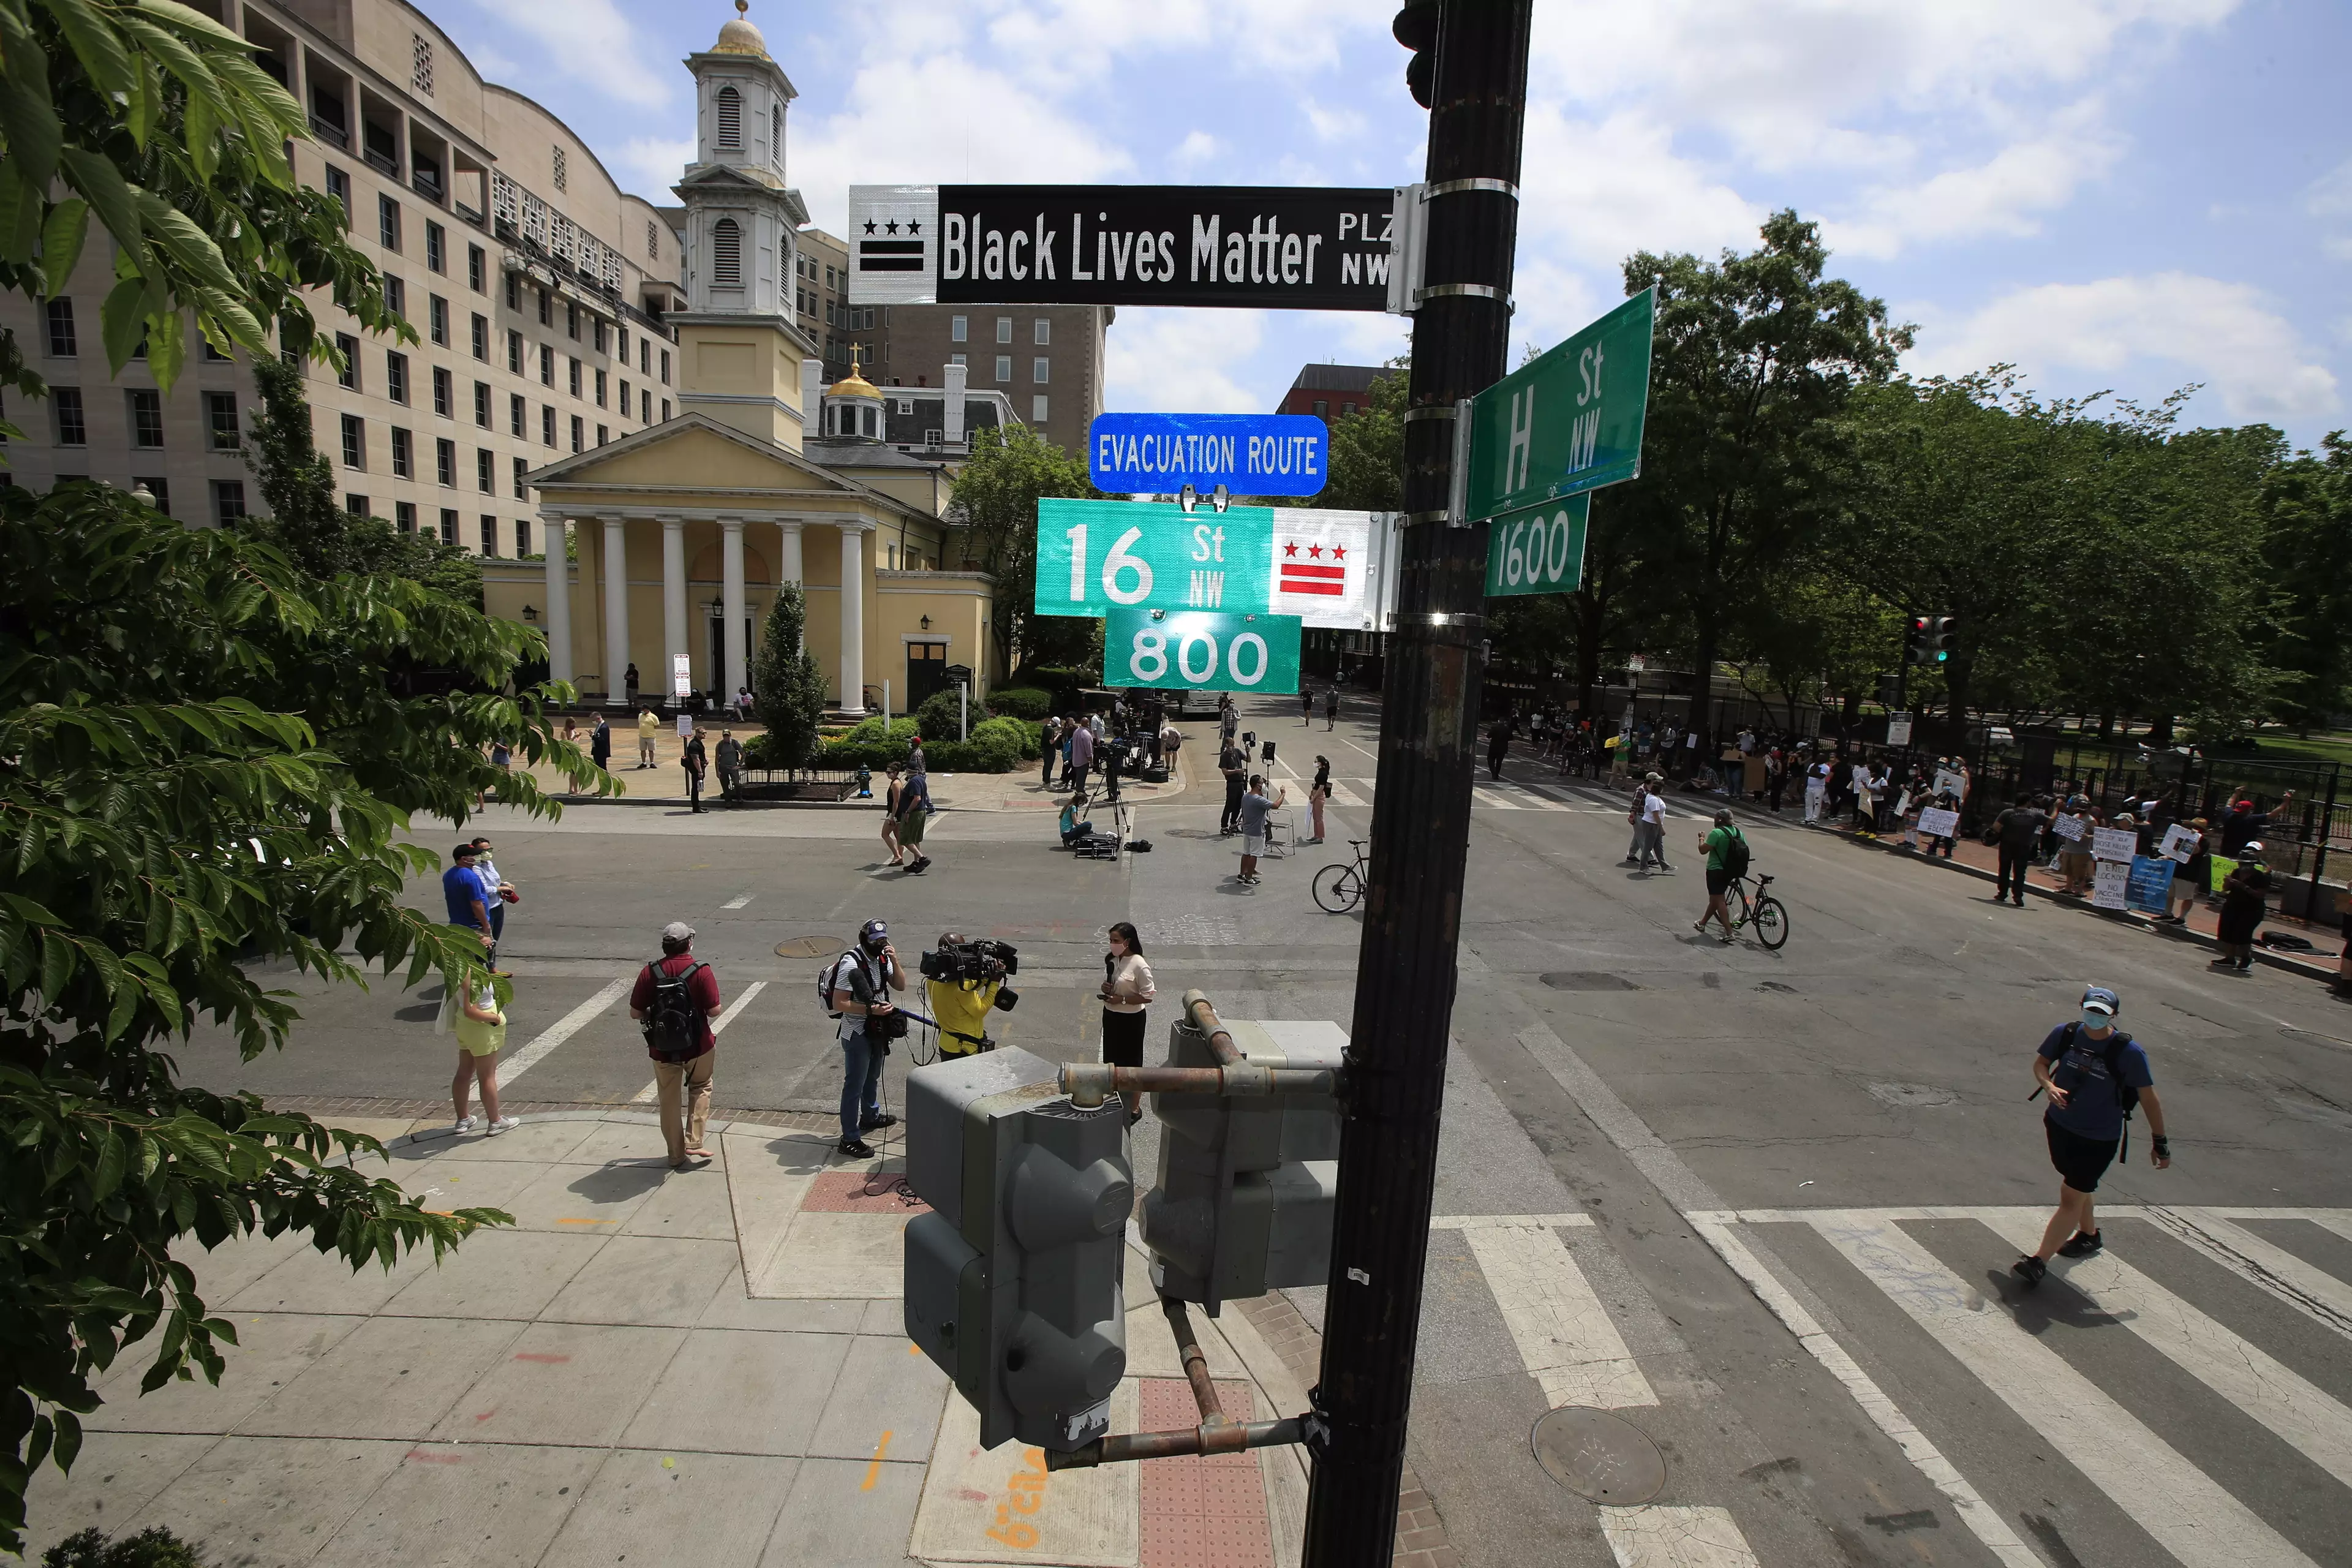 The street has been renamed 'Black Lives Matter Plaza'.